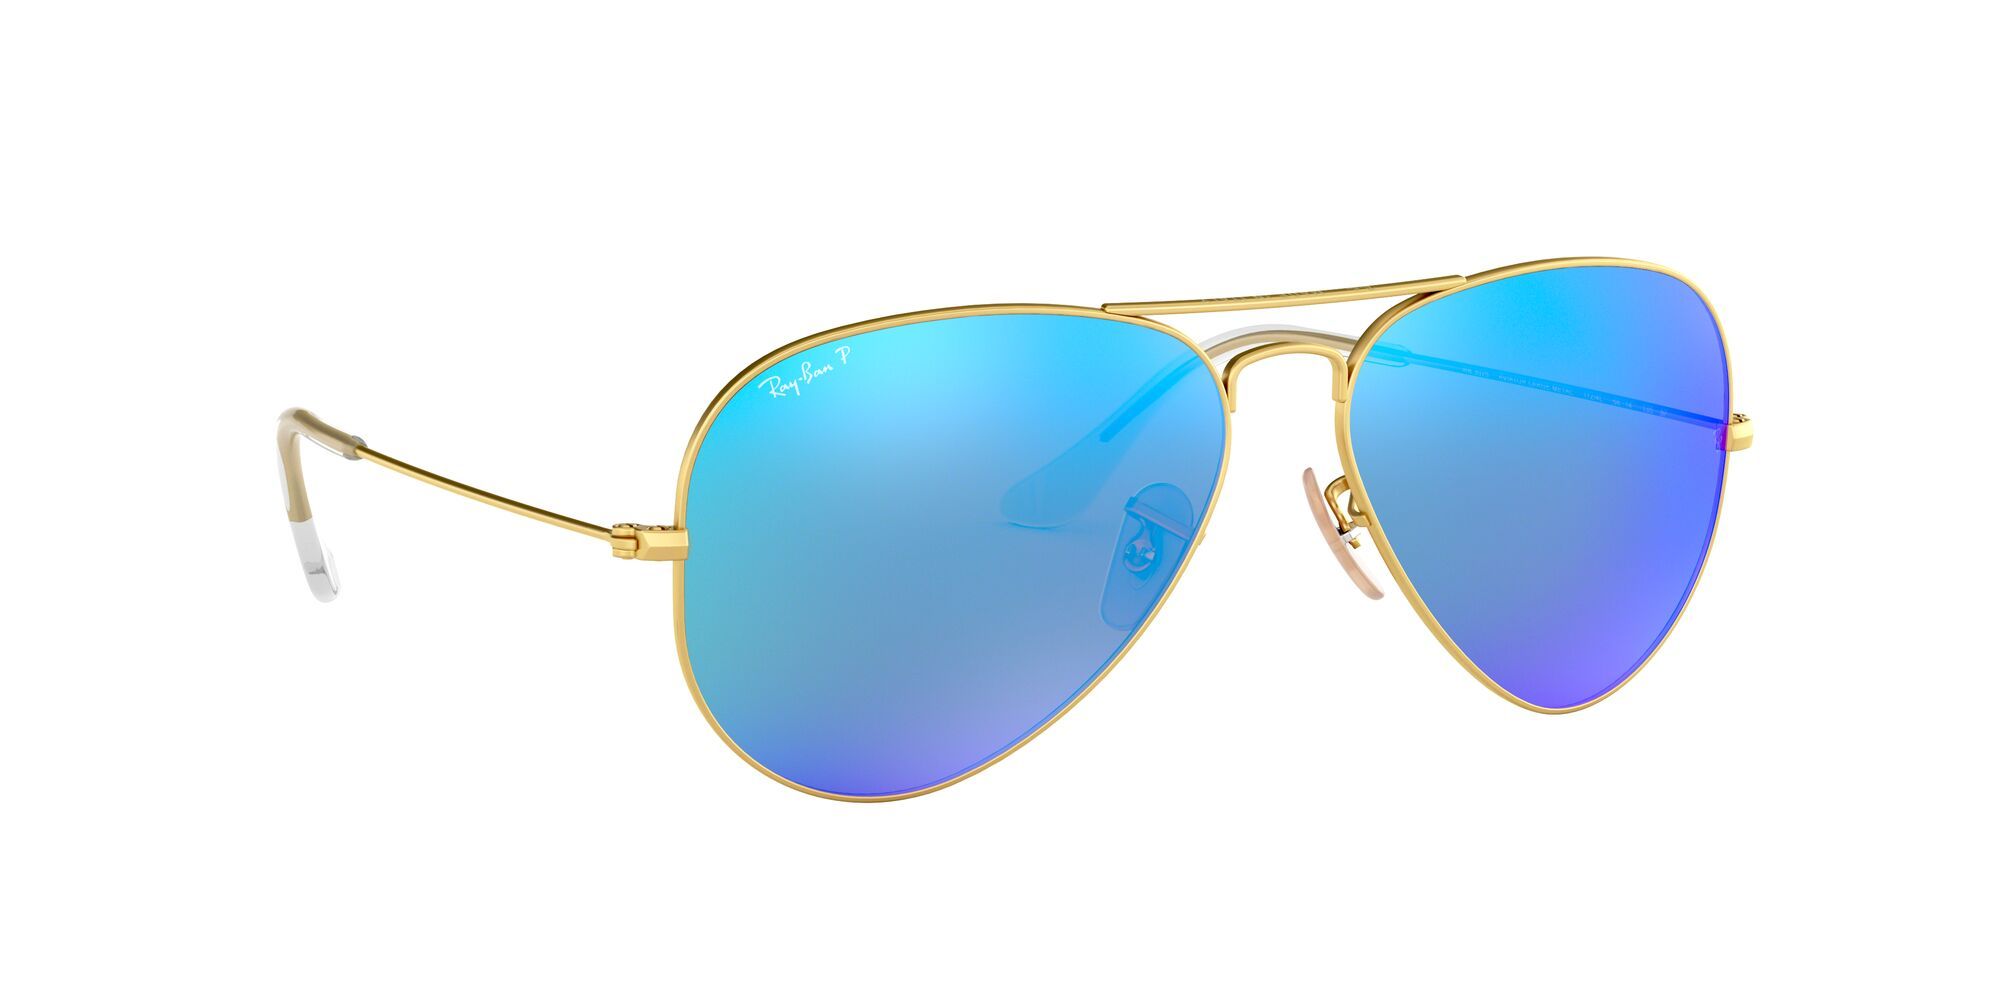 Sky Sunglasses for Kids - Trendy & Protective